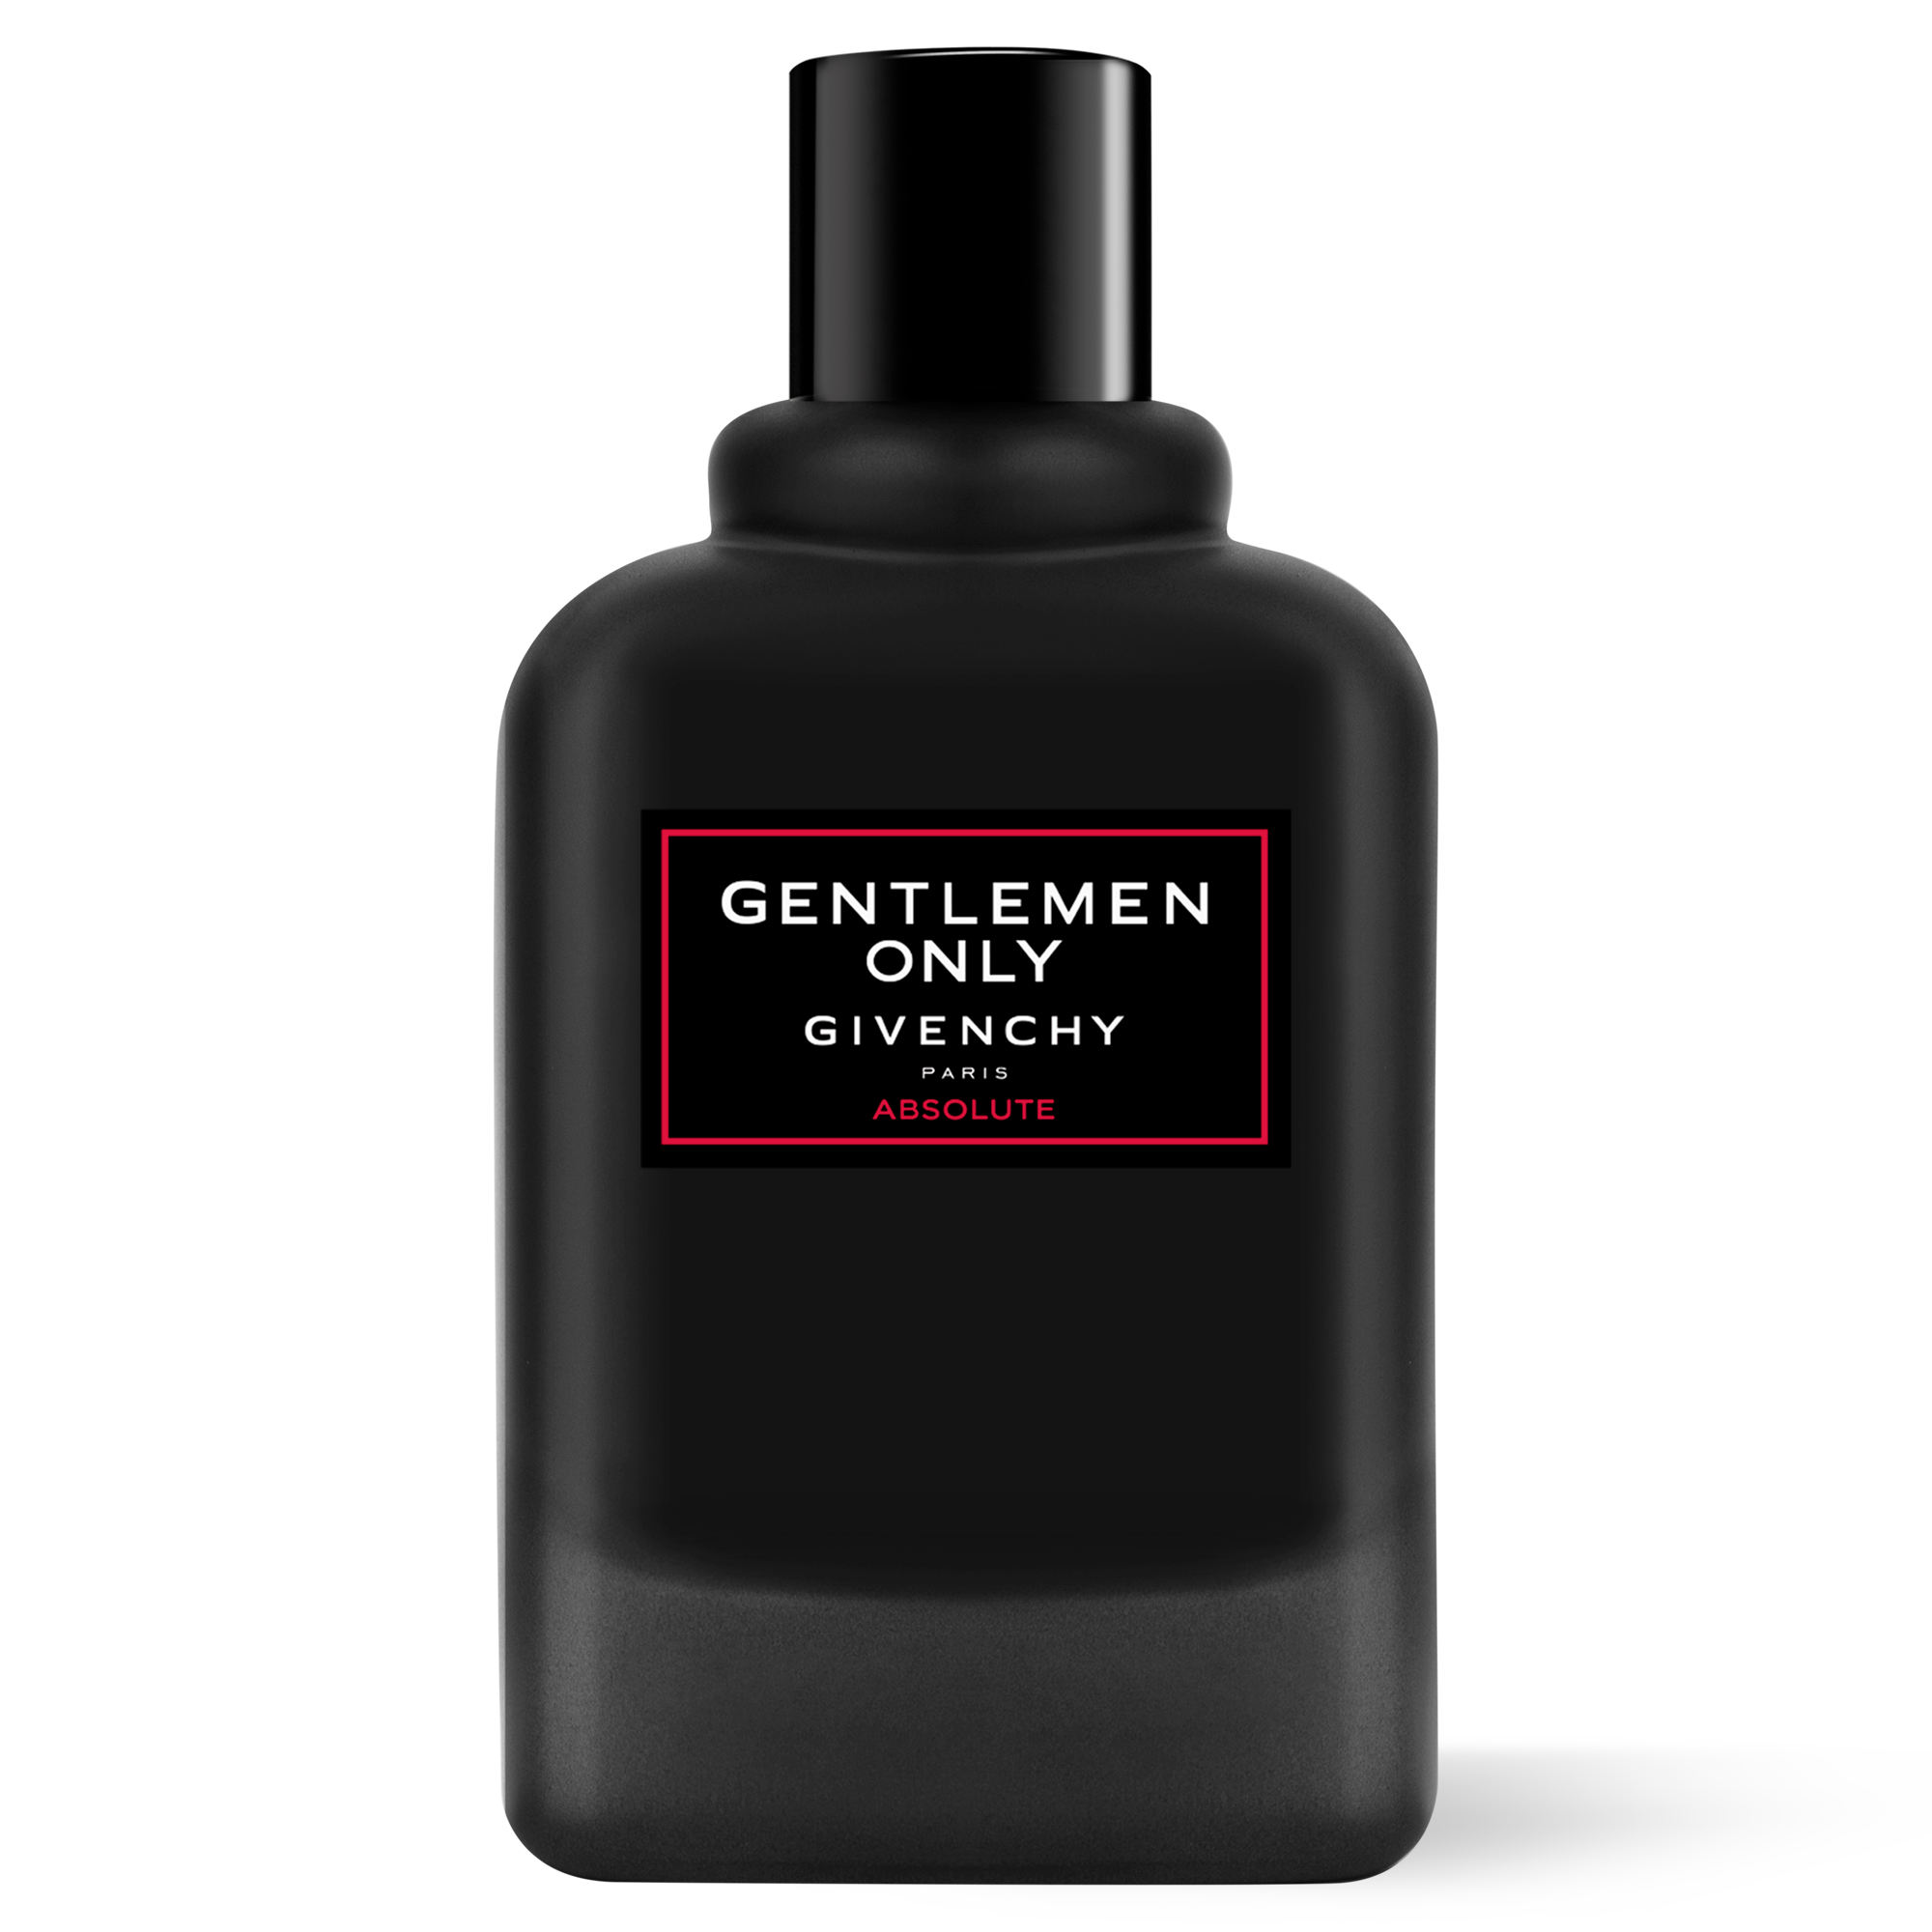 gentleman givenchy 2019